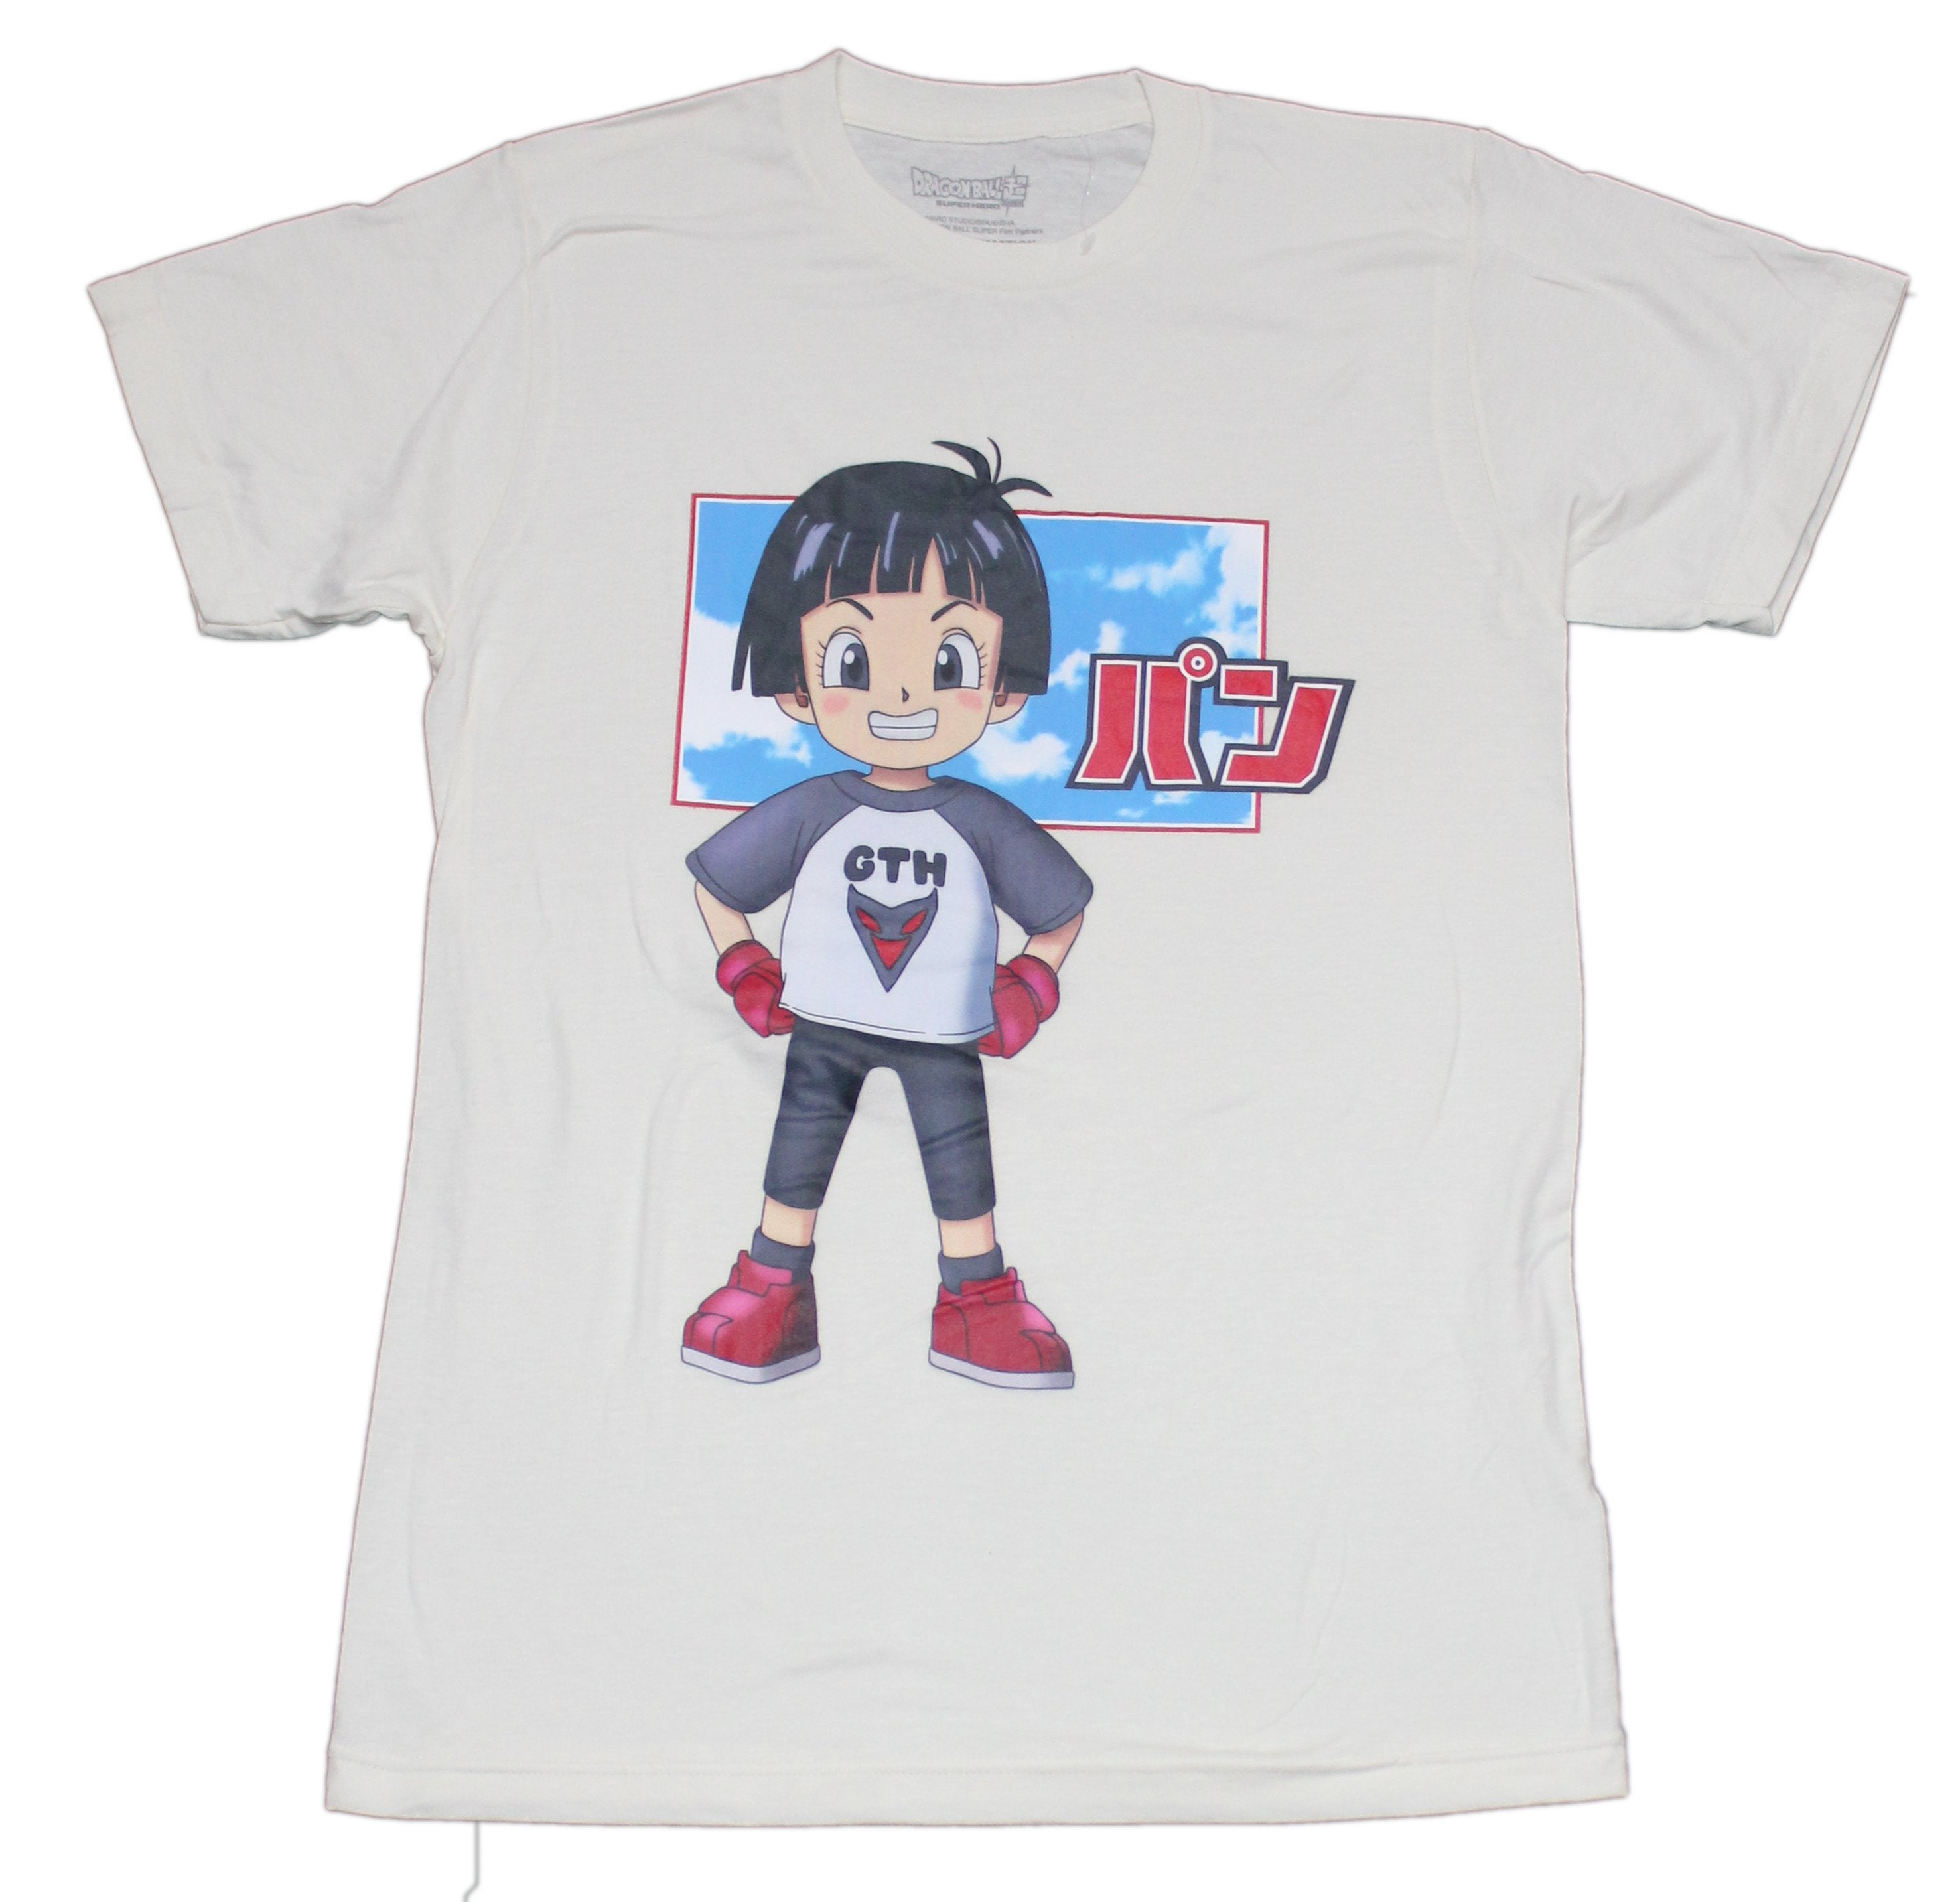 Dragon Ball Z Mens T-Shirt - Pan GTH Shirt Hands on Hips